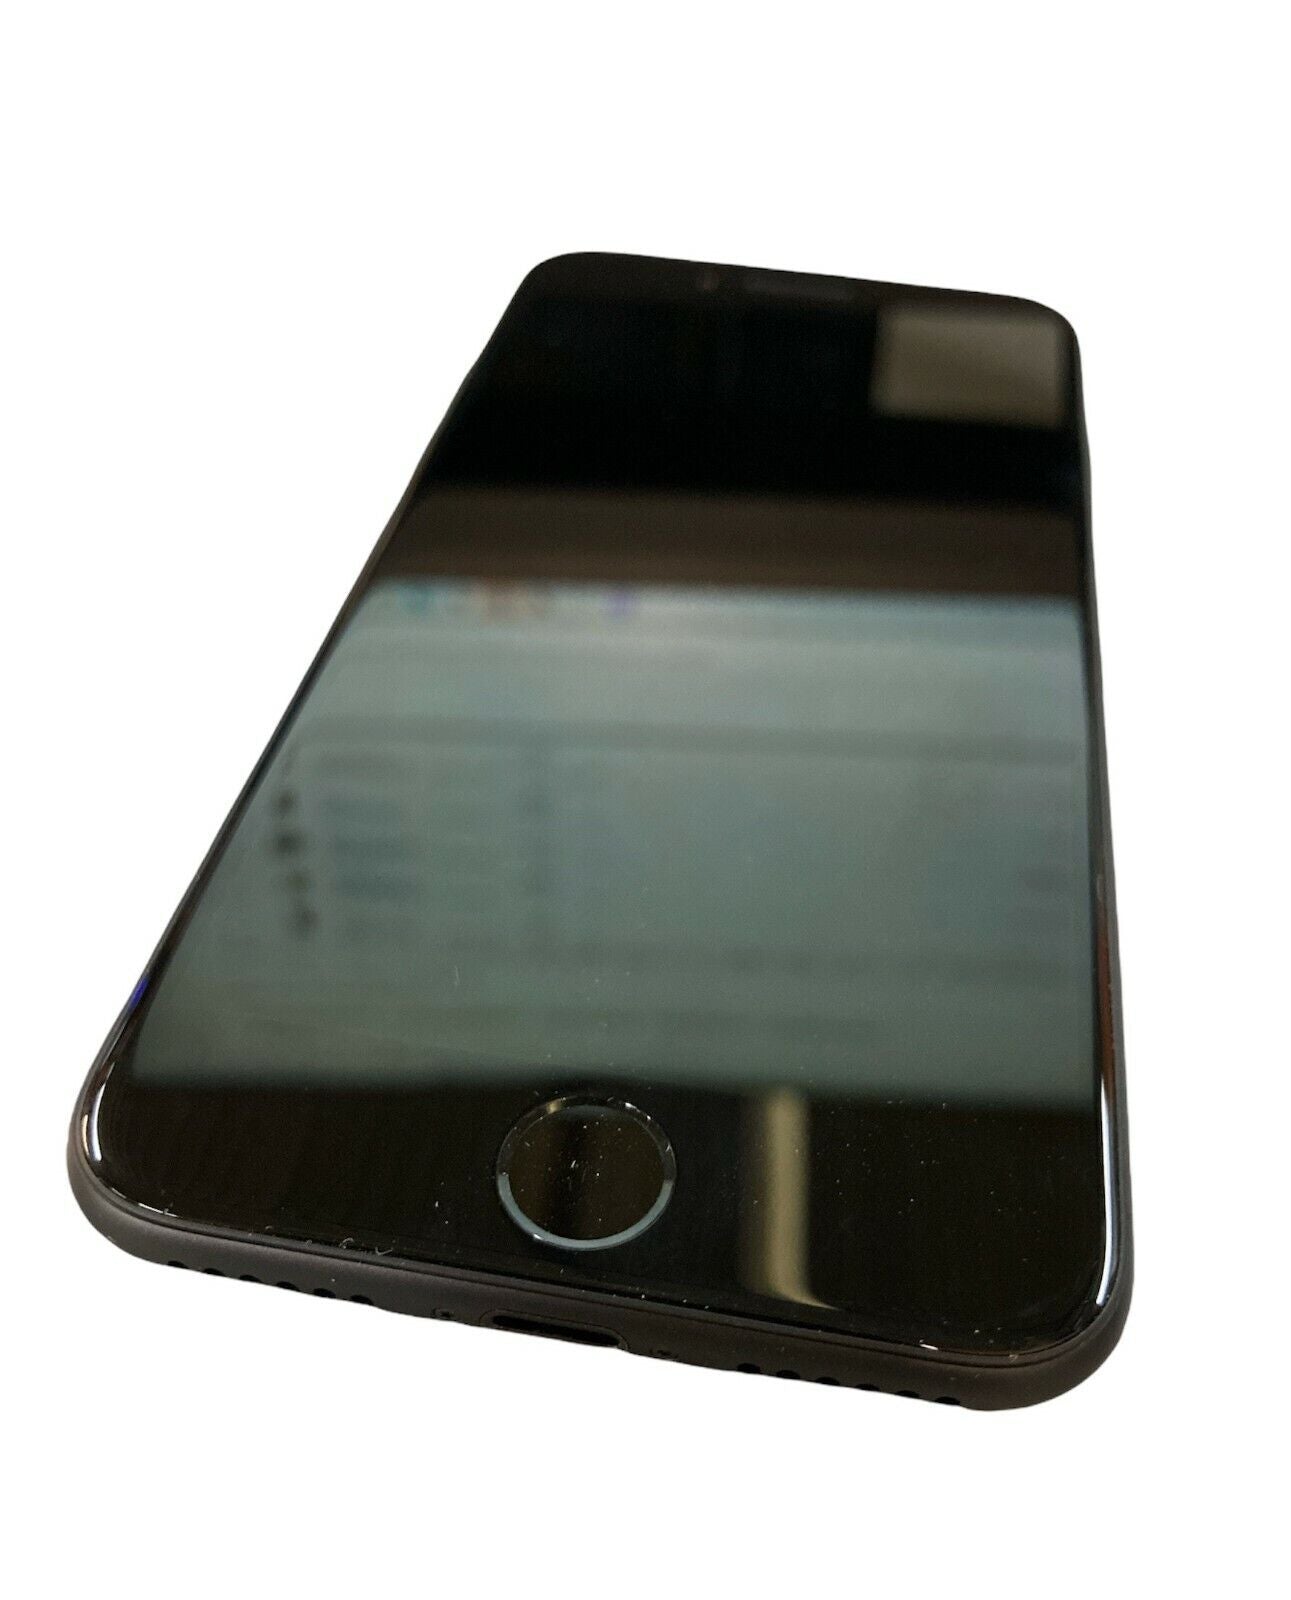 Apple iPhone 7, A1660, 32 GB, Black, MN8G2LL/A